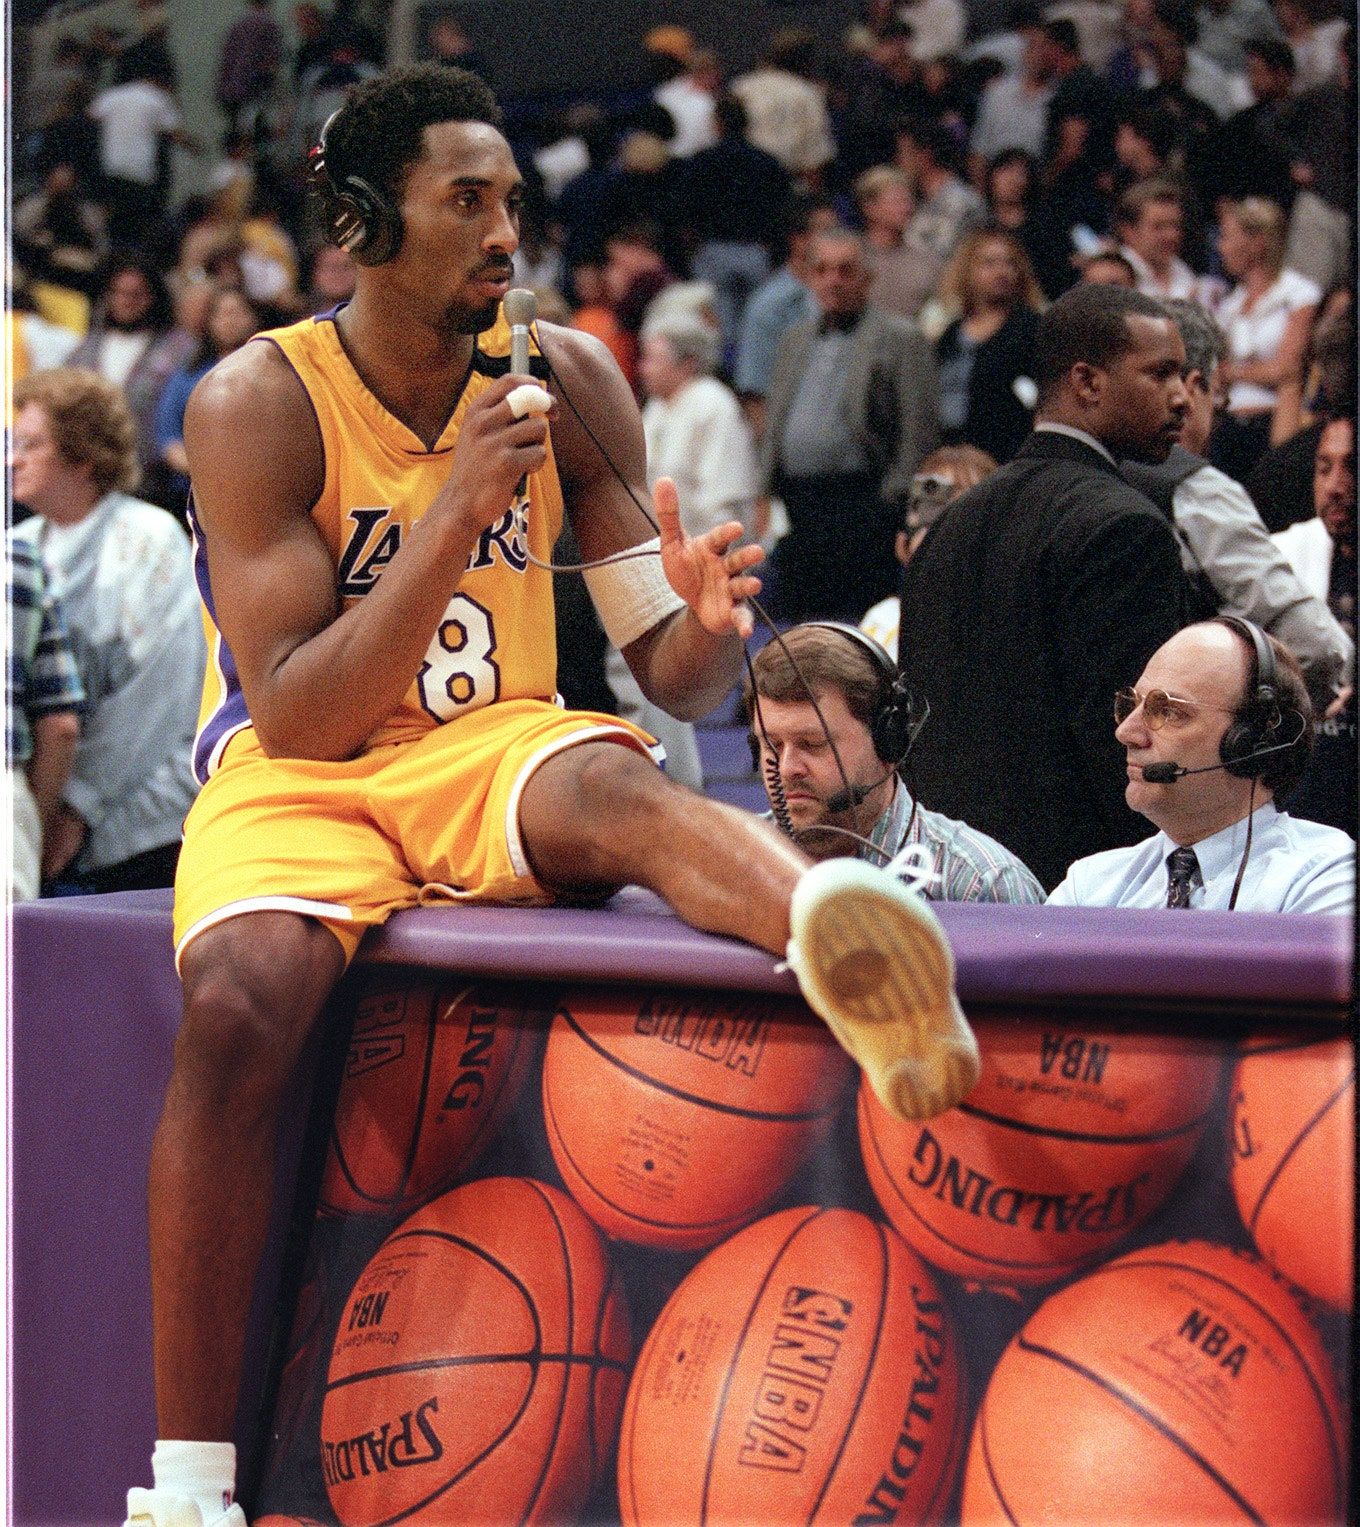 The basketball legend Kobe Bryant in 21 vintage photo